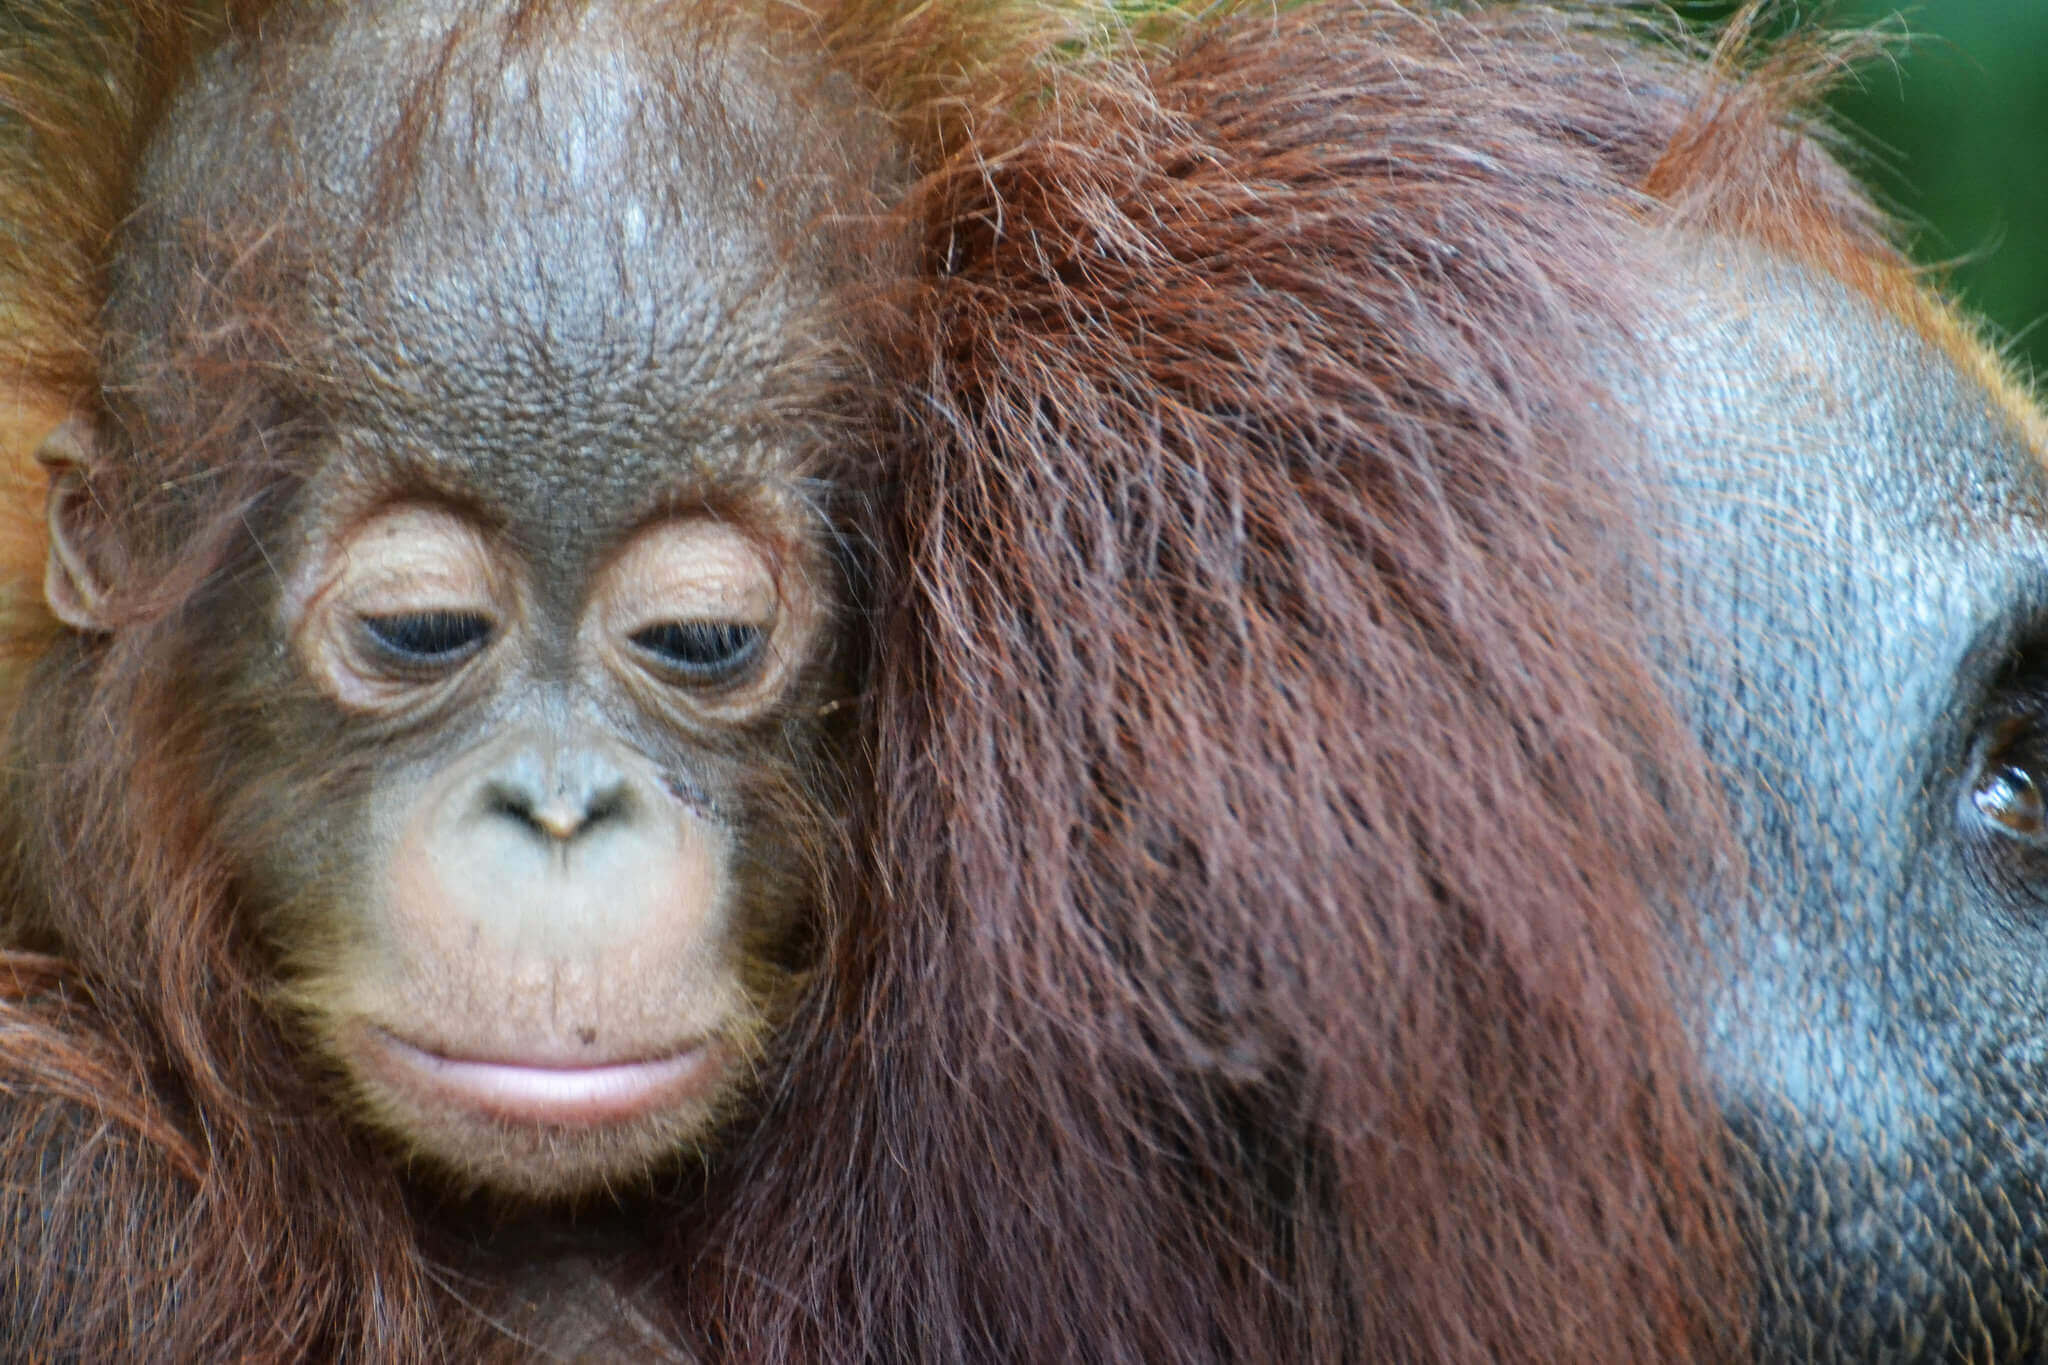 Uljin,Victor-TanjungPuting-Orangutan4